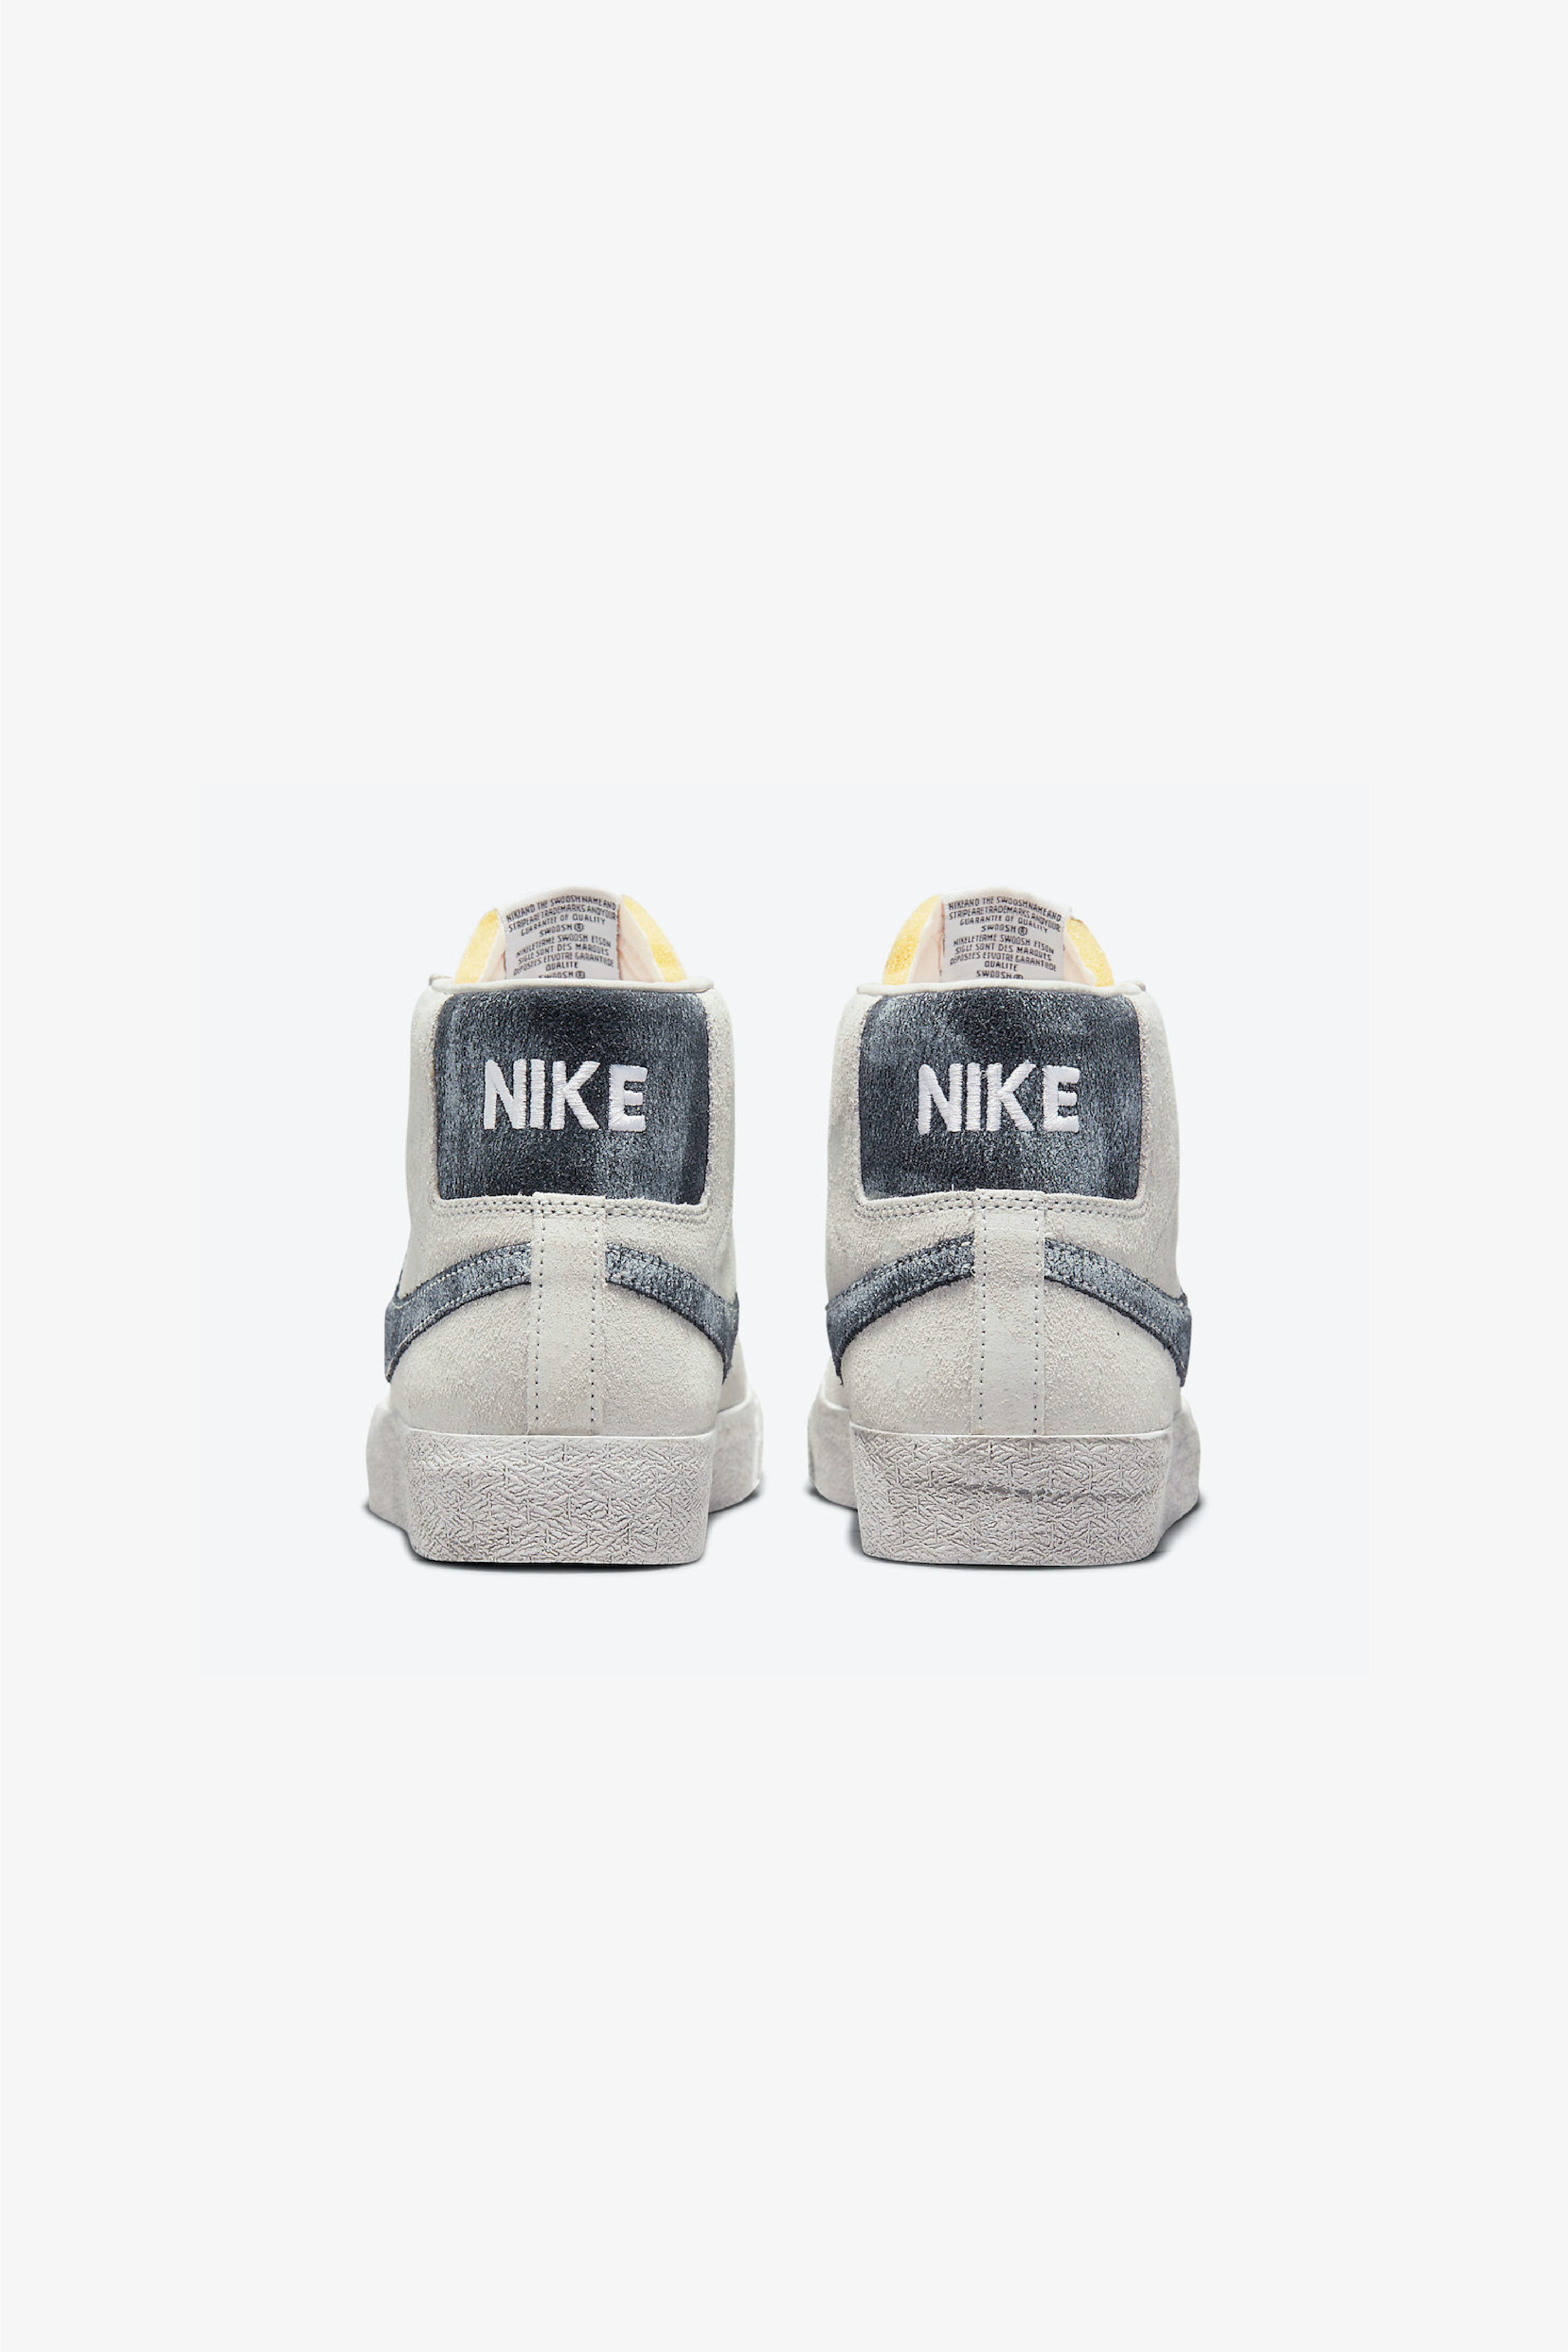 Selectshop FRAME - NIKE SB Nike SB Zoom Blazer Mid PRM "Faded Sail Black" Footwear Dubai